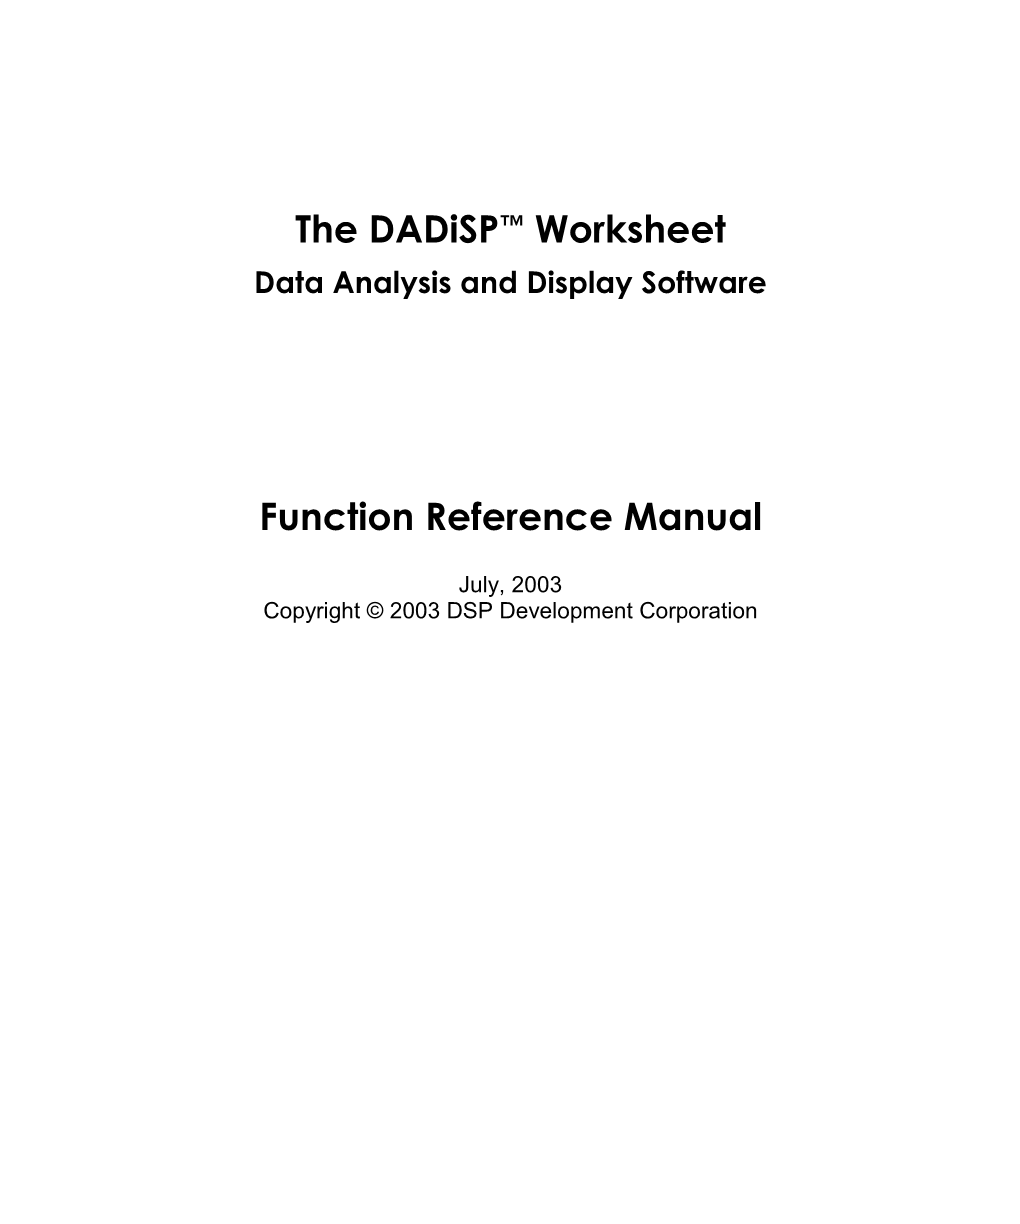 The Dadisp™ Worksheet Function Reference Manual